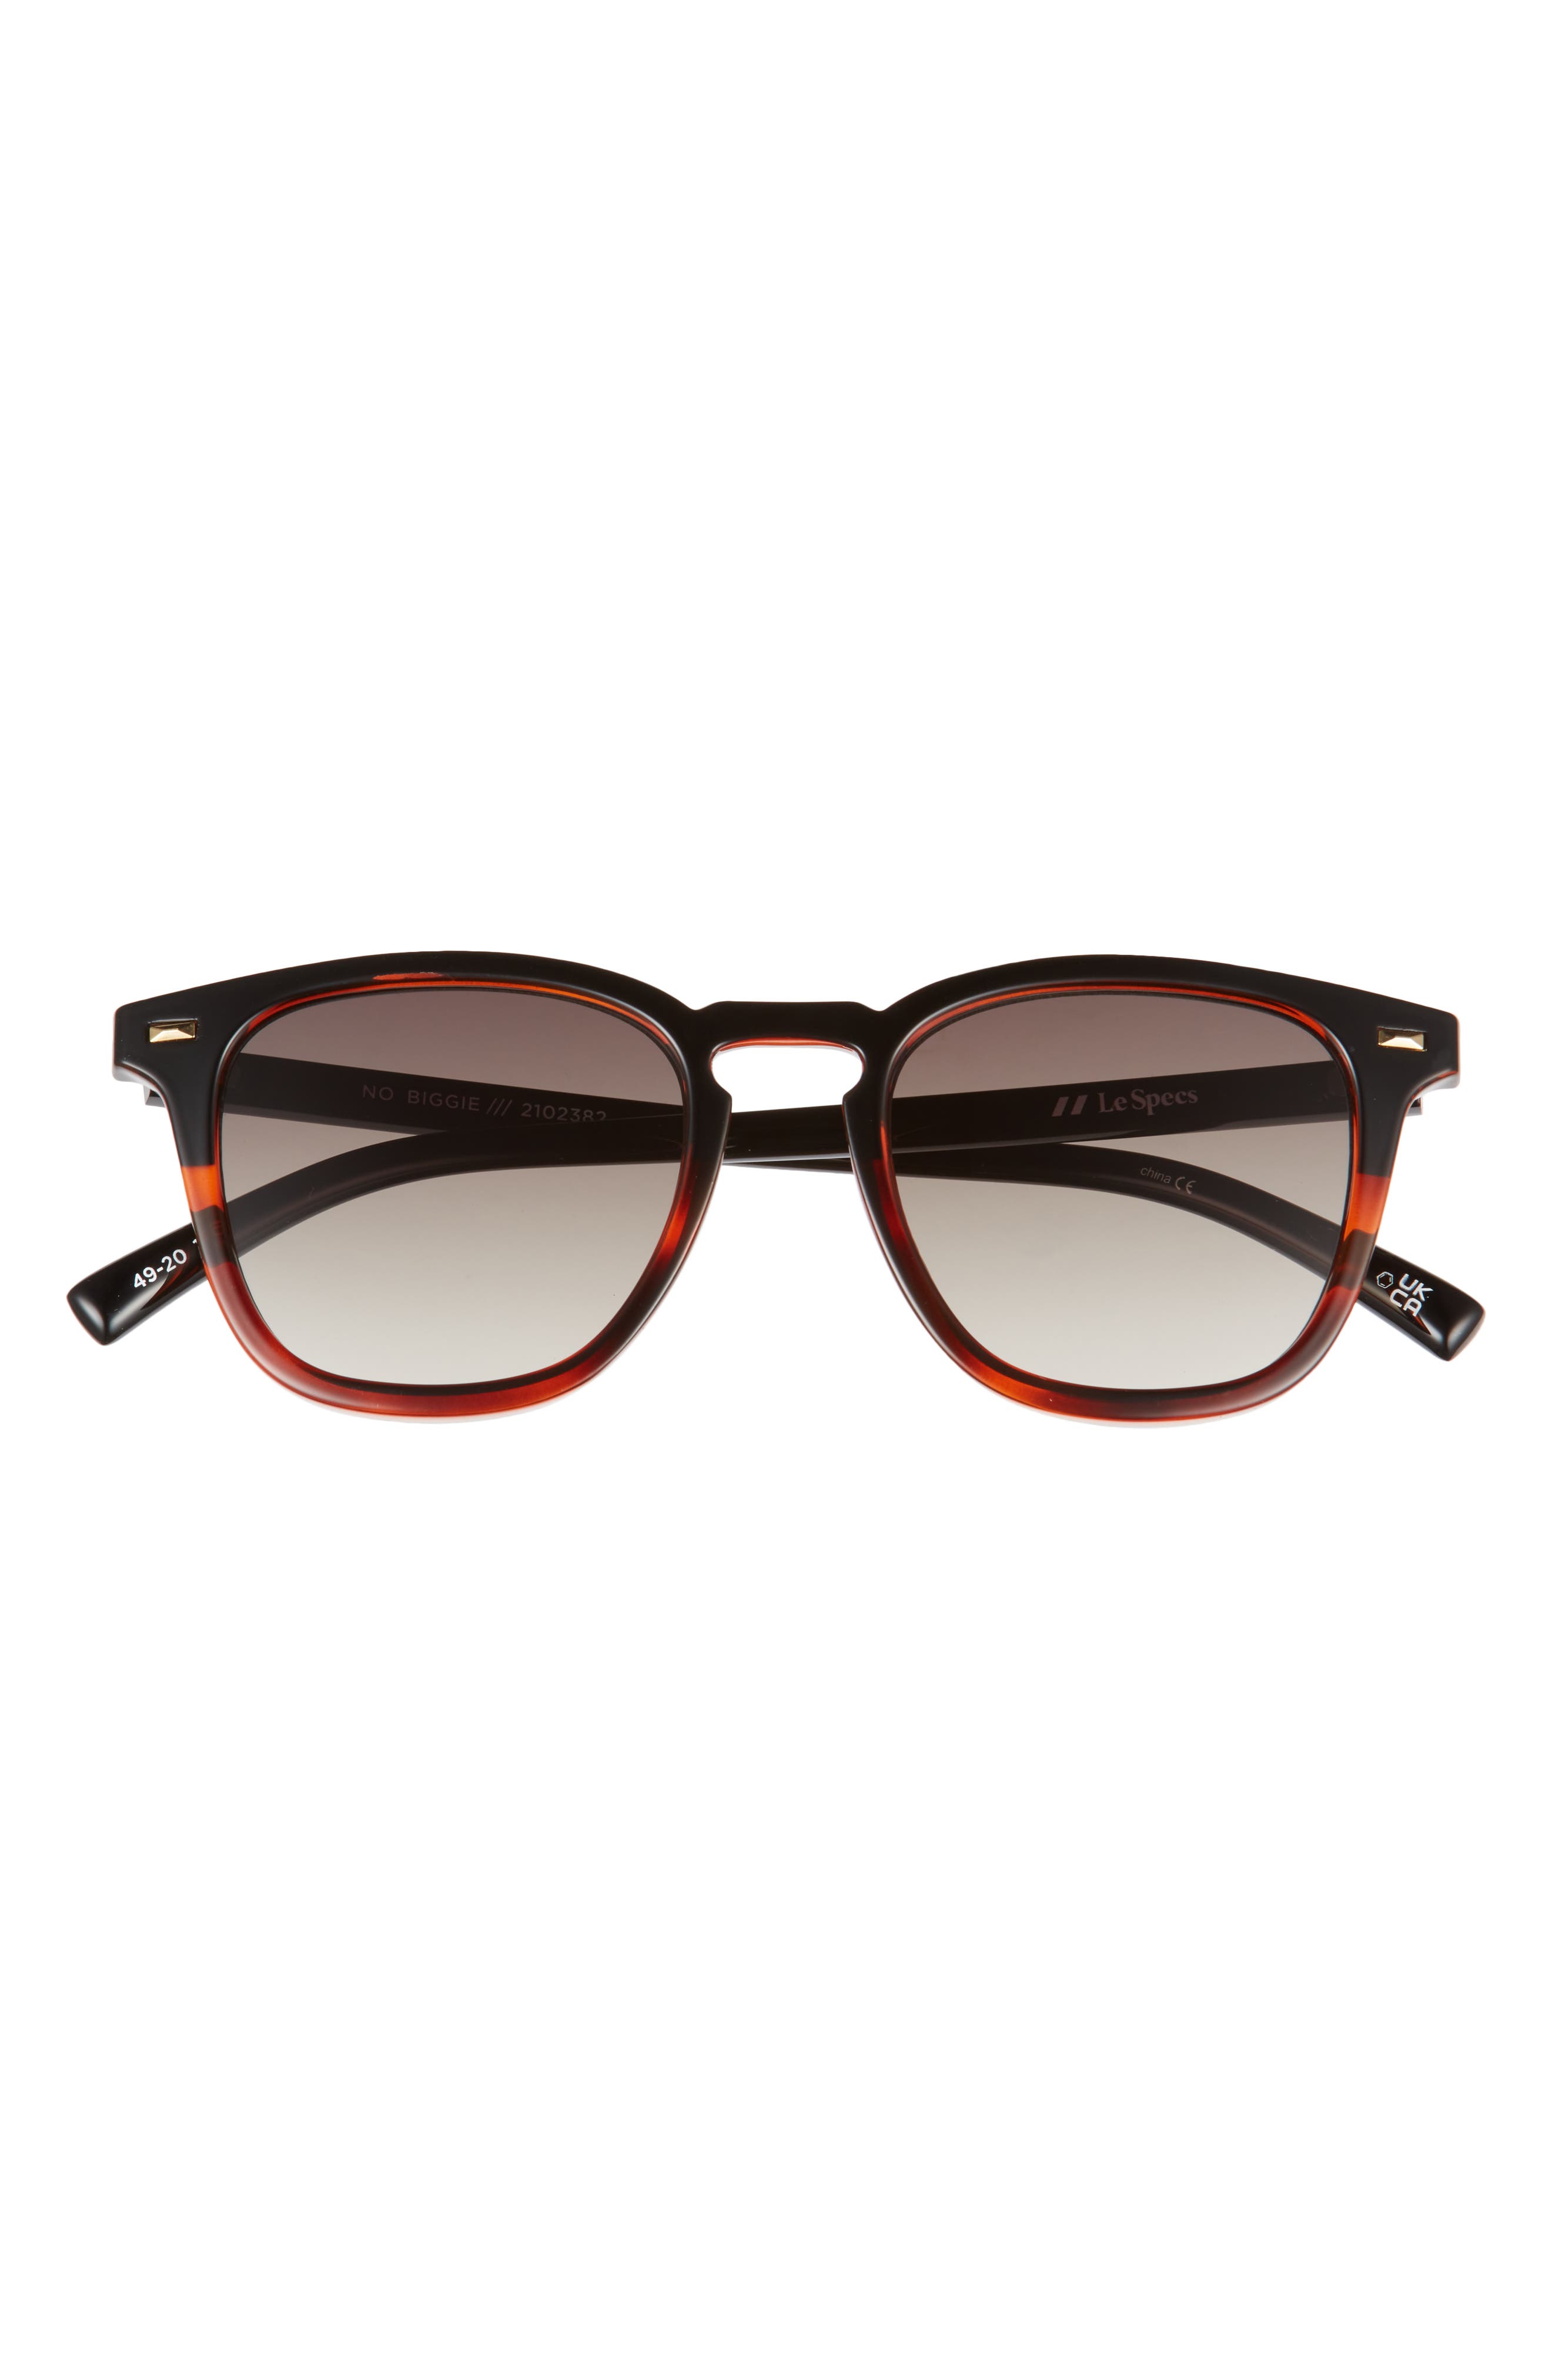 Le Specs No Biggie 49mm Square Sunglasses in Black /Tort /Khaki Grad at Nordstrom